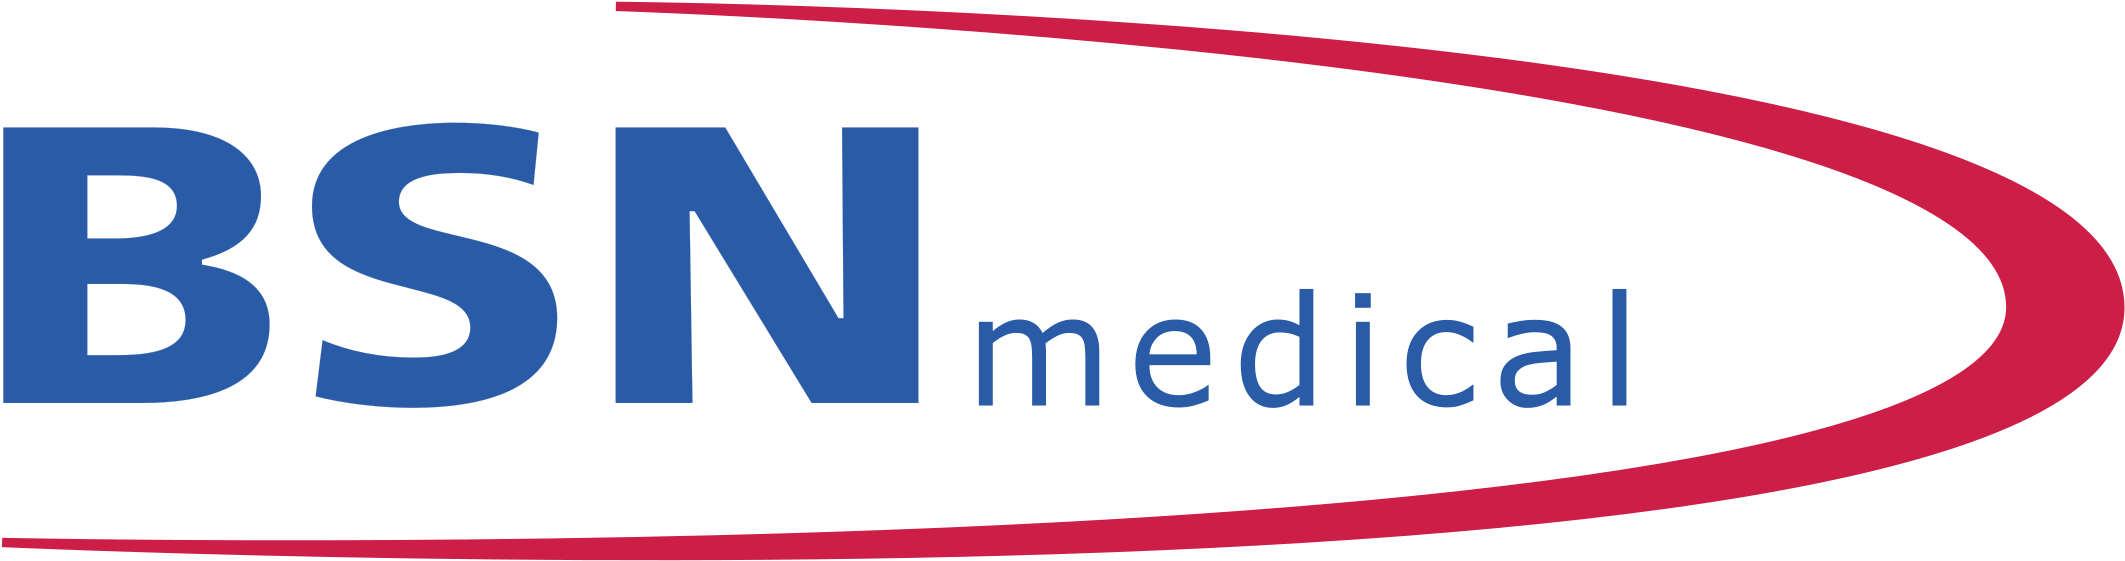 Bsn Medical 01 Logo Png Transparent - Bsn Medical (2400x2400), Png Download